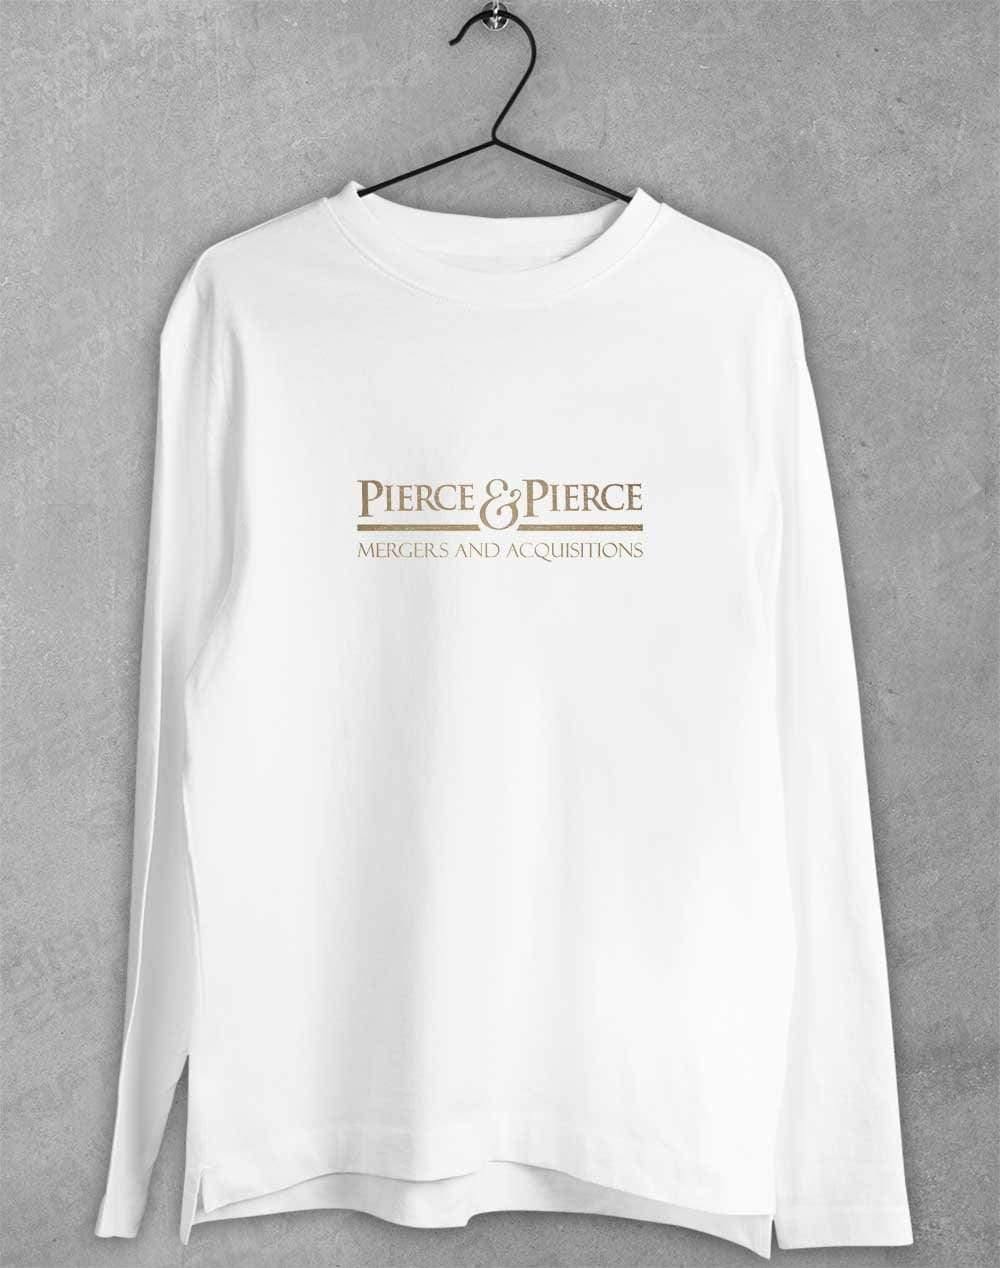 Pierce and Pierce Long Sleeve T-Shirt S / White  - Off World Tees